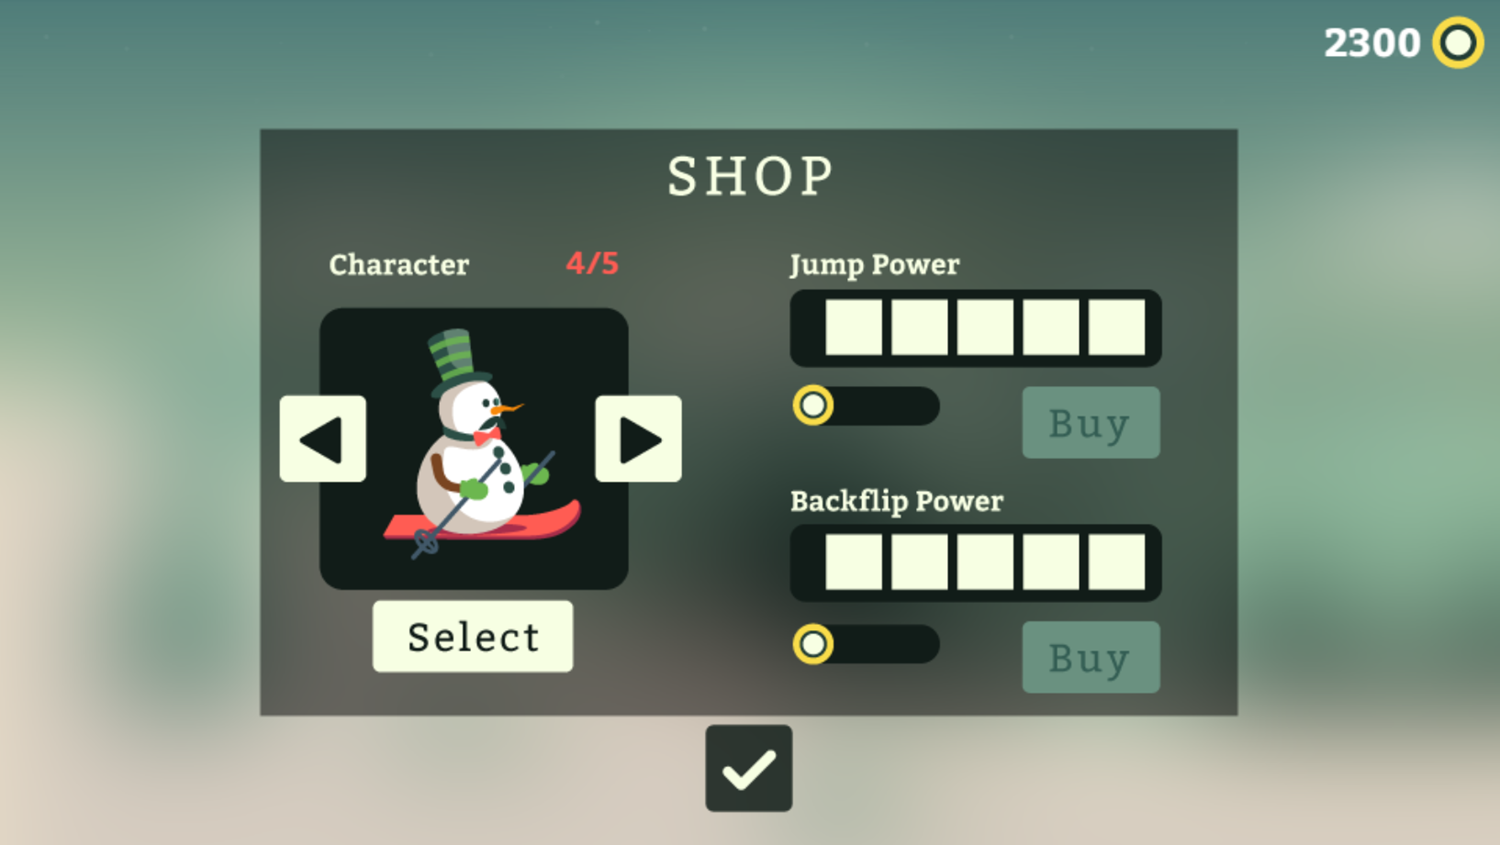 Ski Slopes Game Shop Fully Upgraded Screenshot.